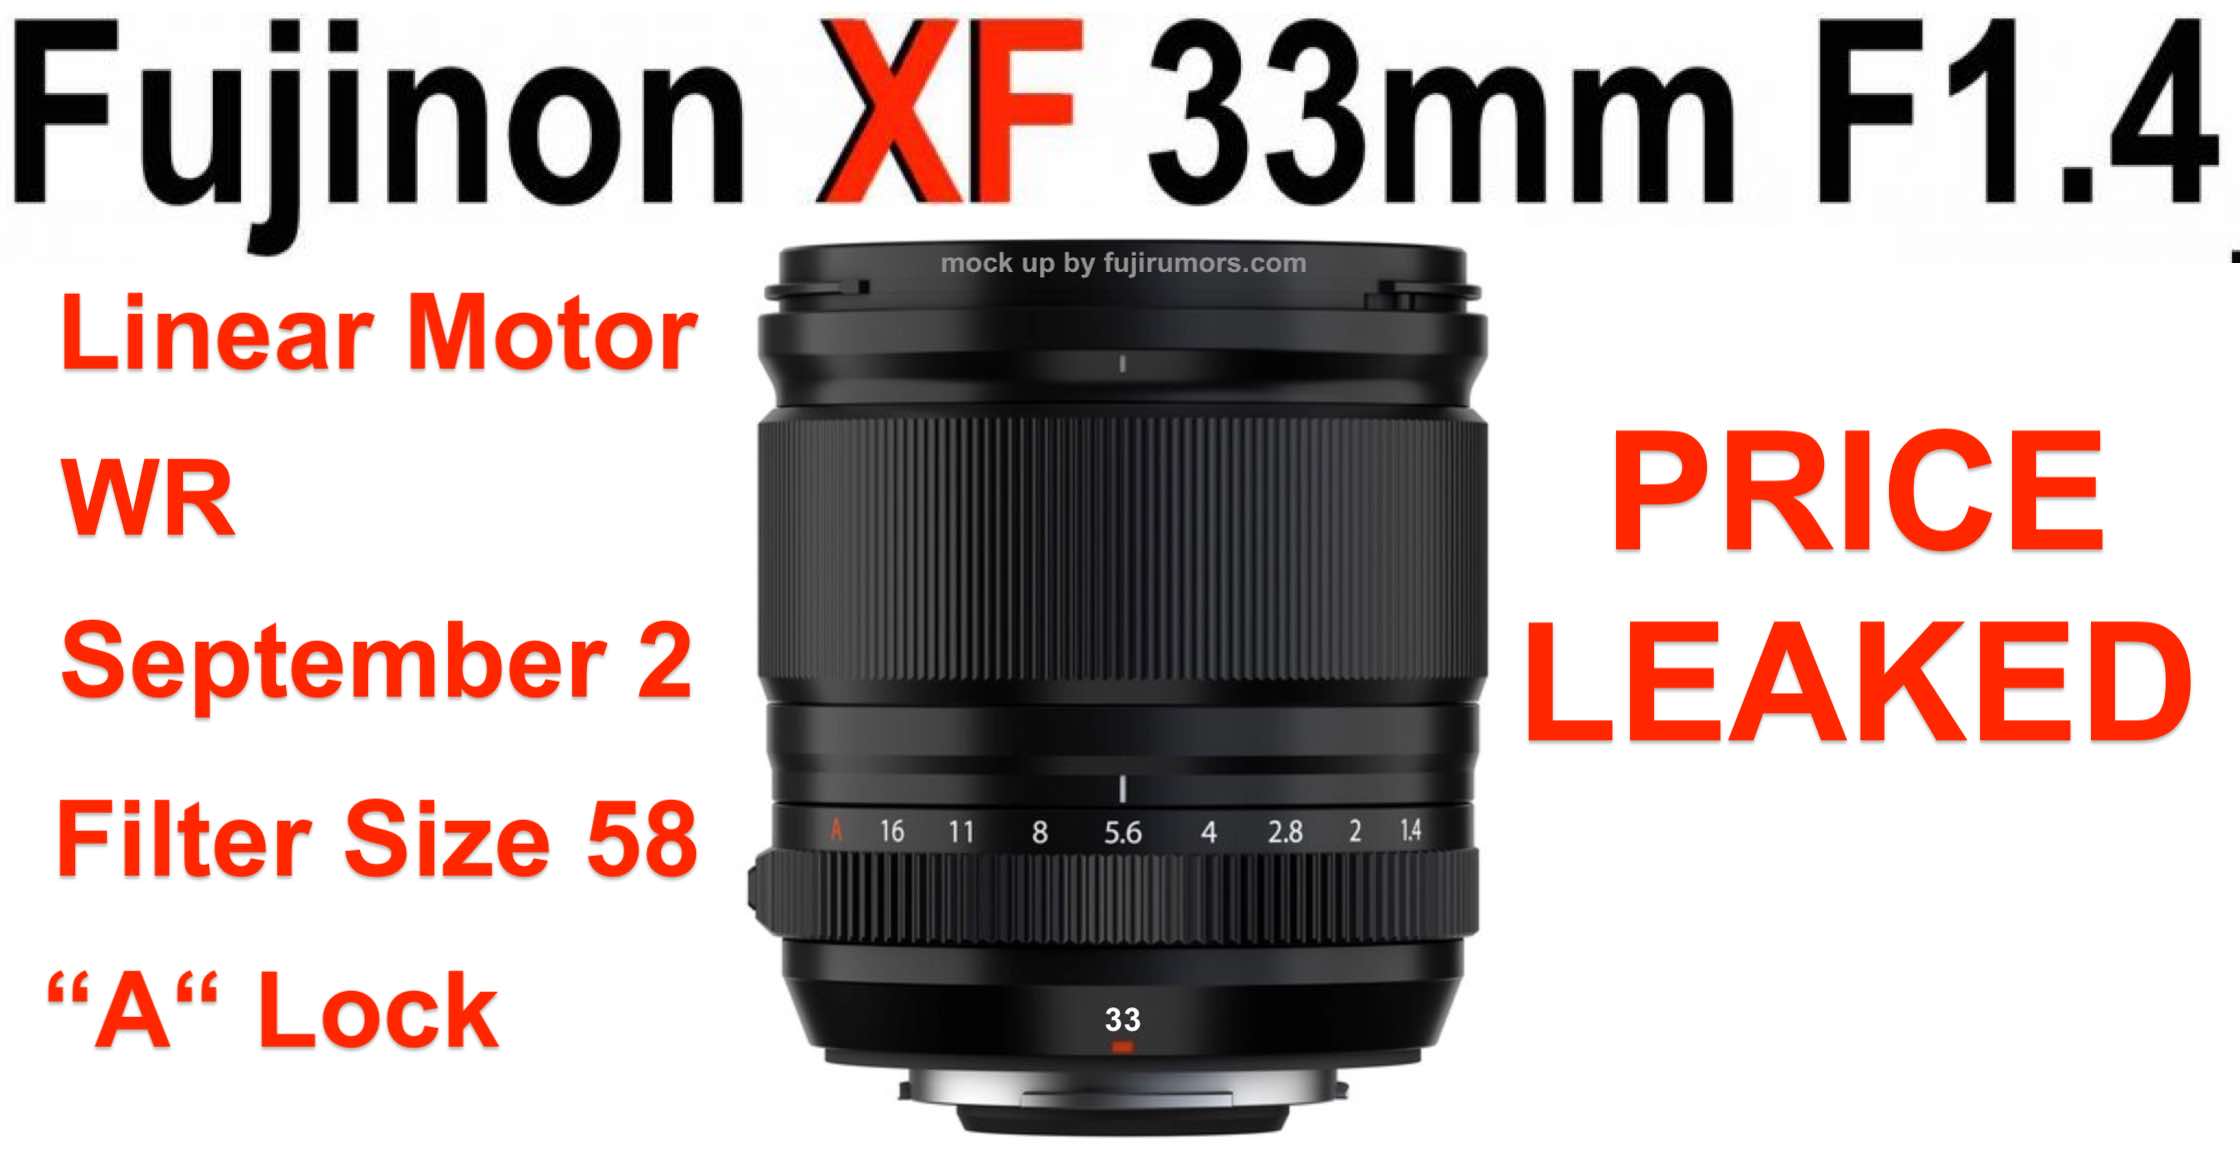 LEAKED: Fujinon XF 33mm f/1.4 Price and Additional Specs - Fuji Rumors